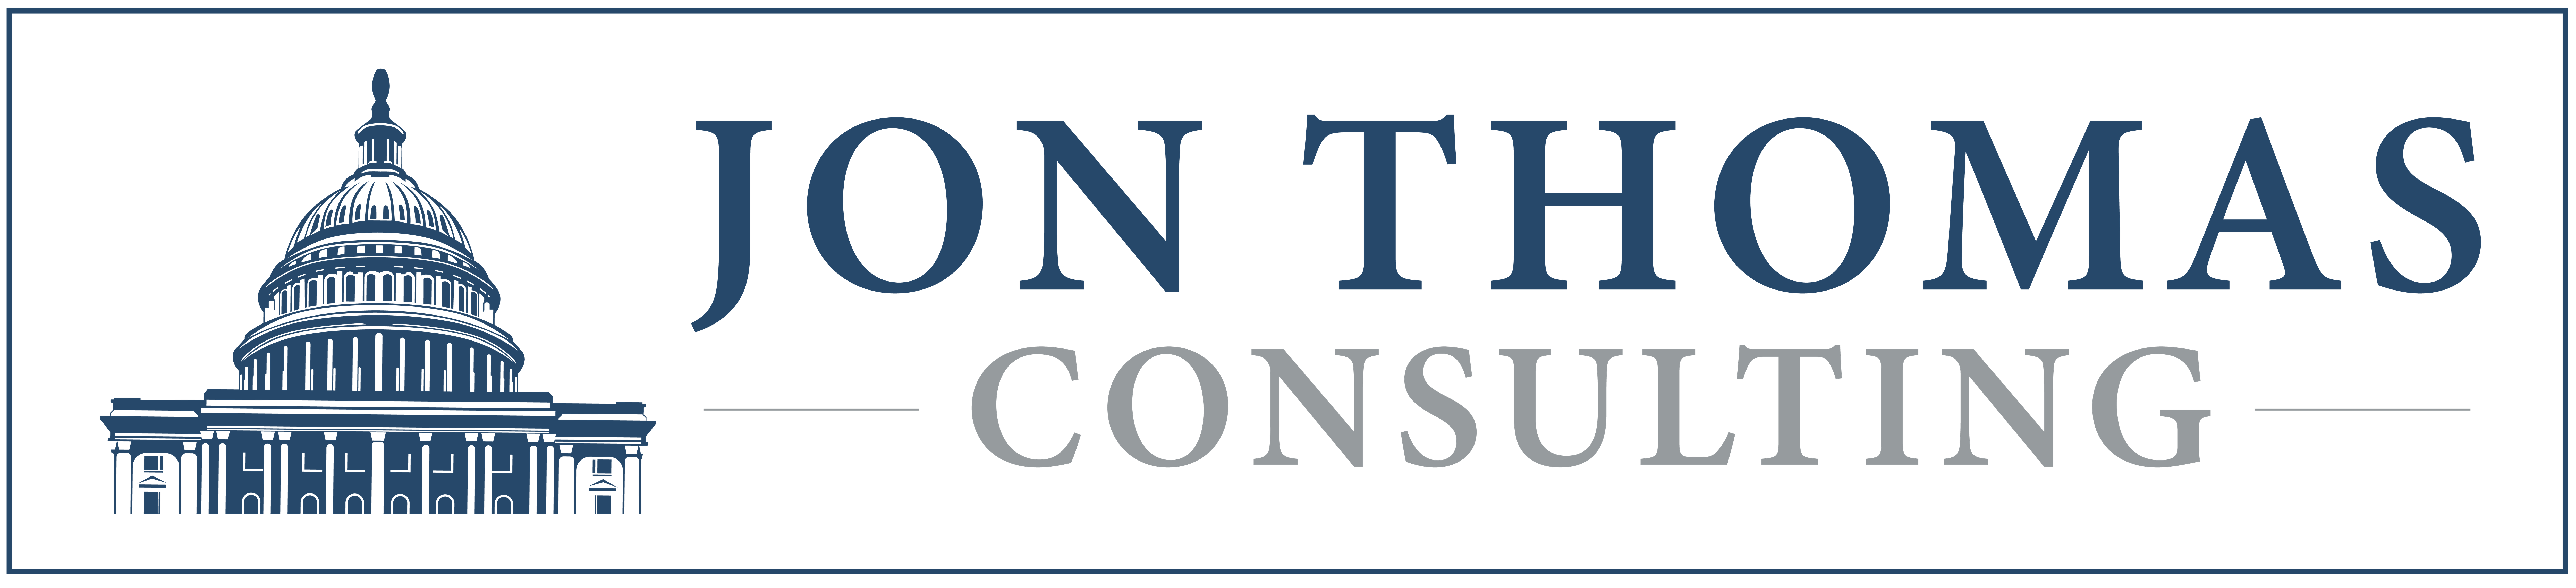 Jon Thomas Consulting (JTC) Logo_Horizontal-02